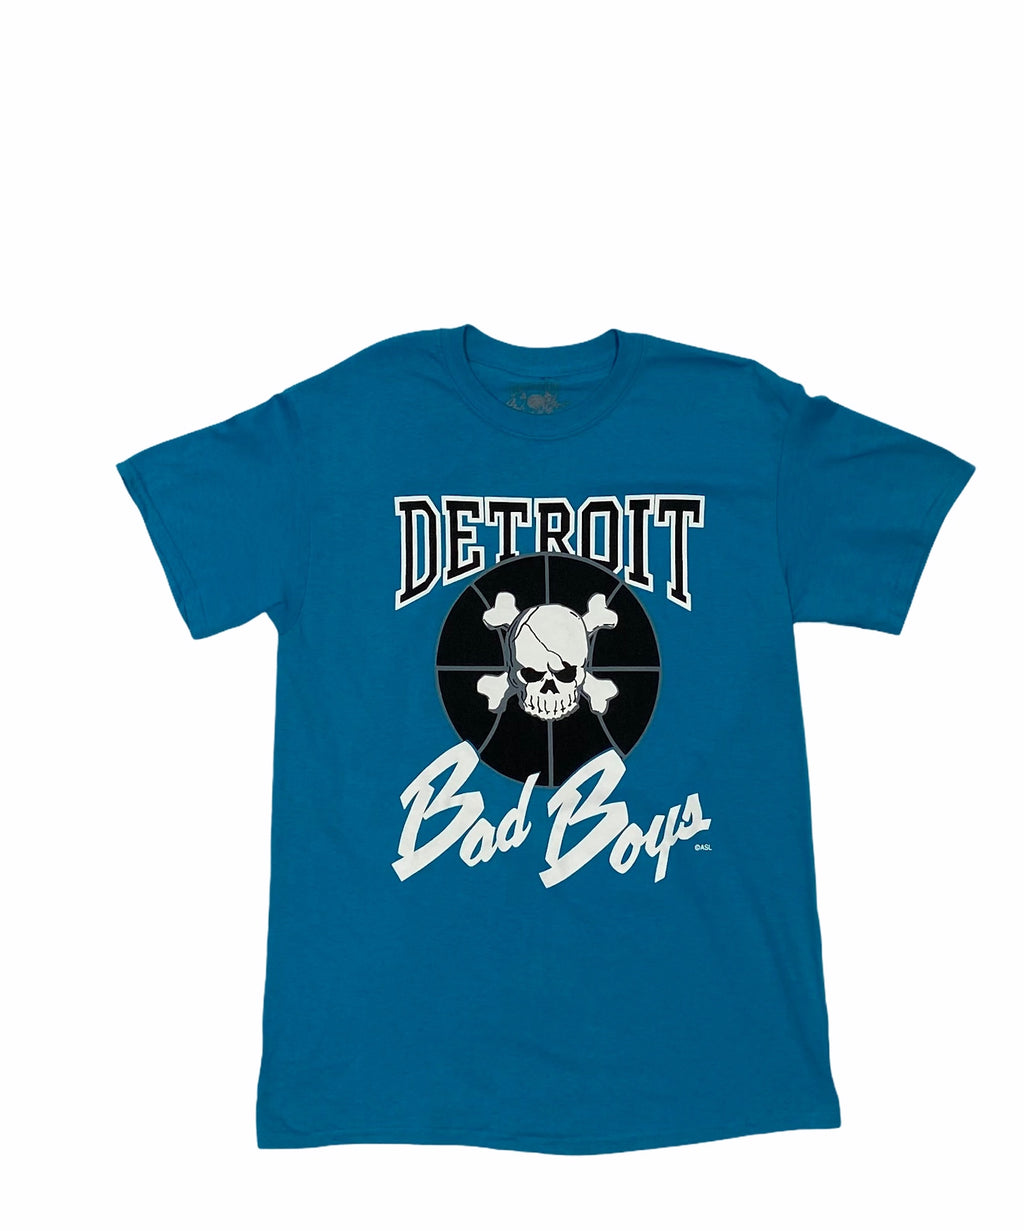 Authentic Detroit Bad Boys Teal T-Shirt